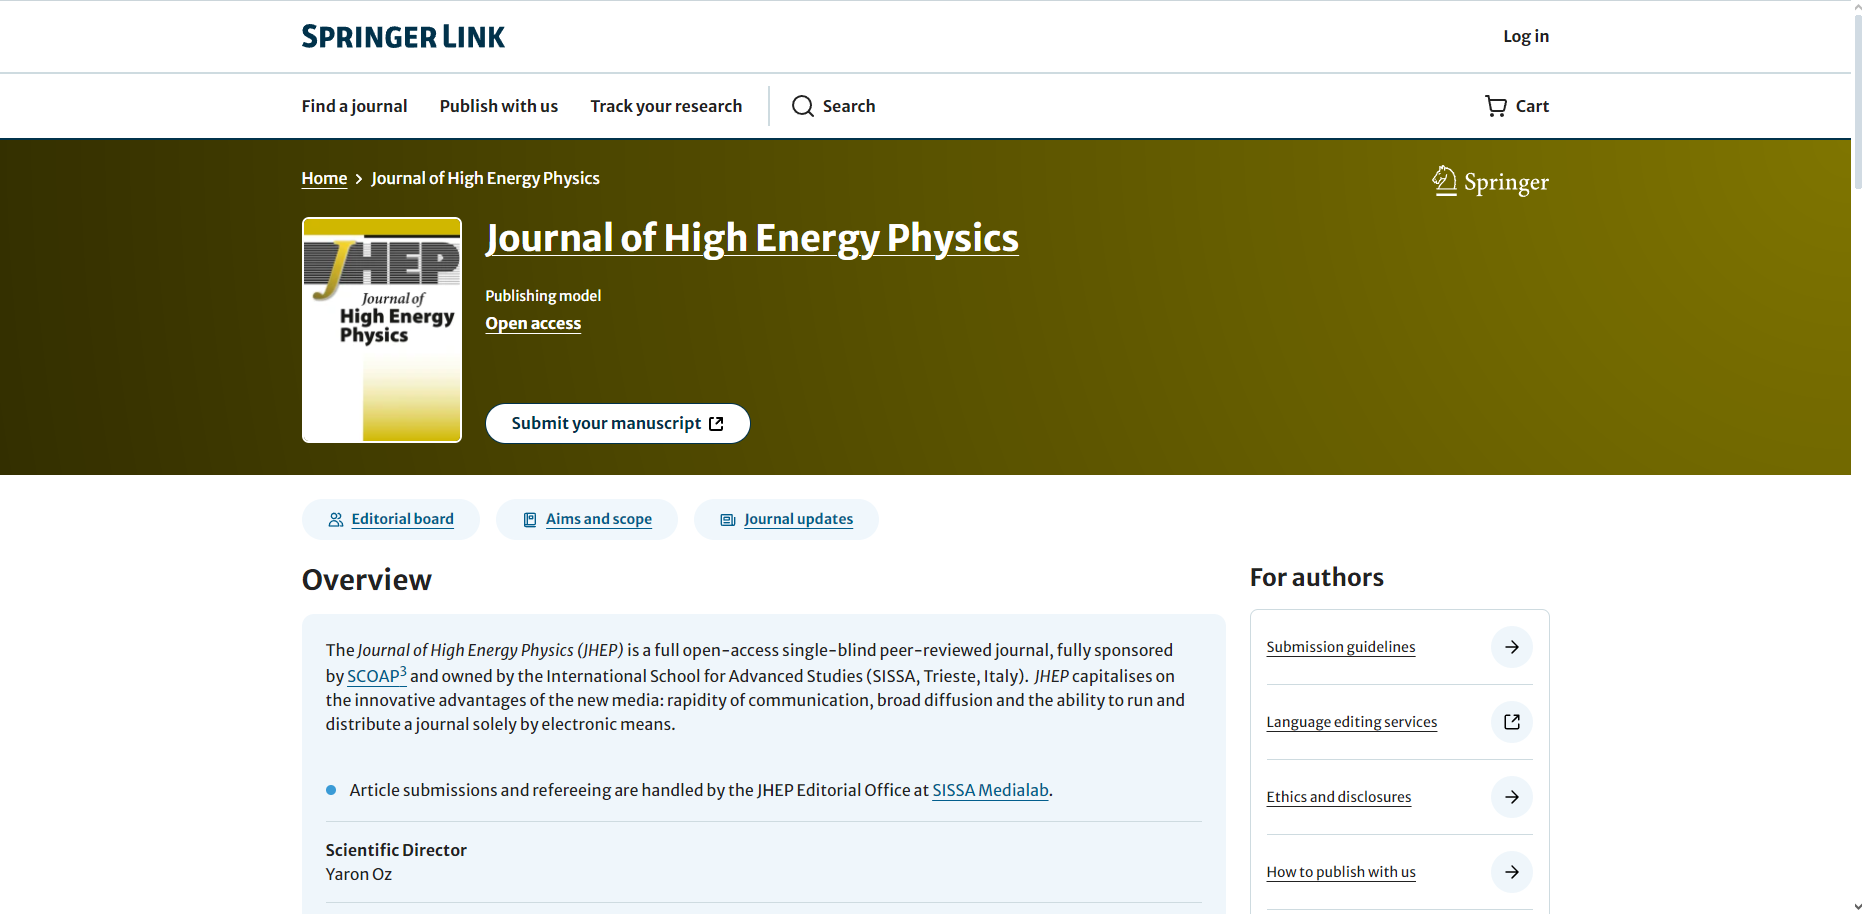 Journal of High Energy Physics